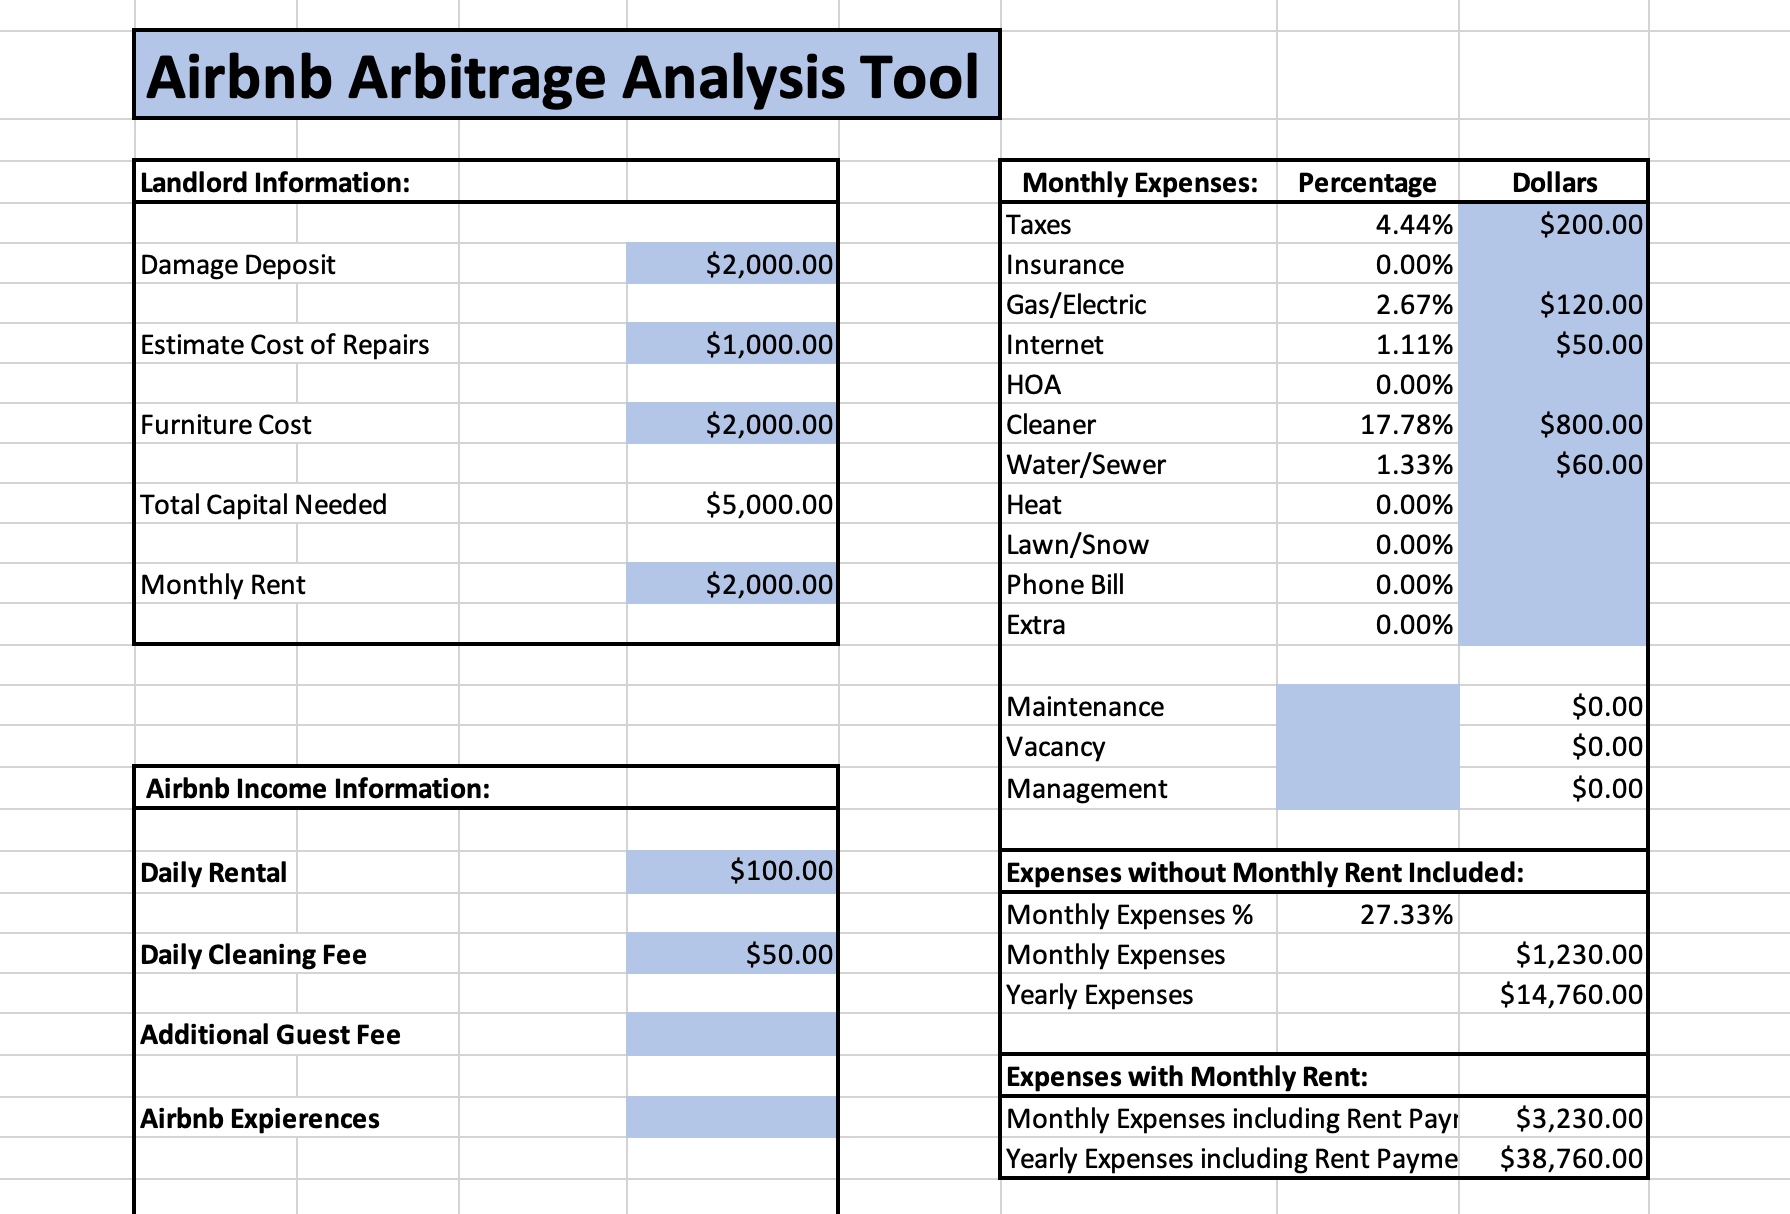 Airbnb Arbitrage Analysis Tool